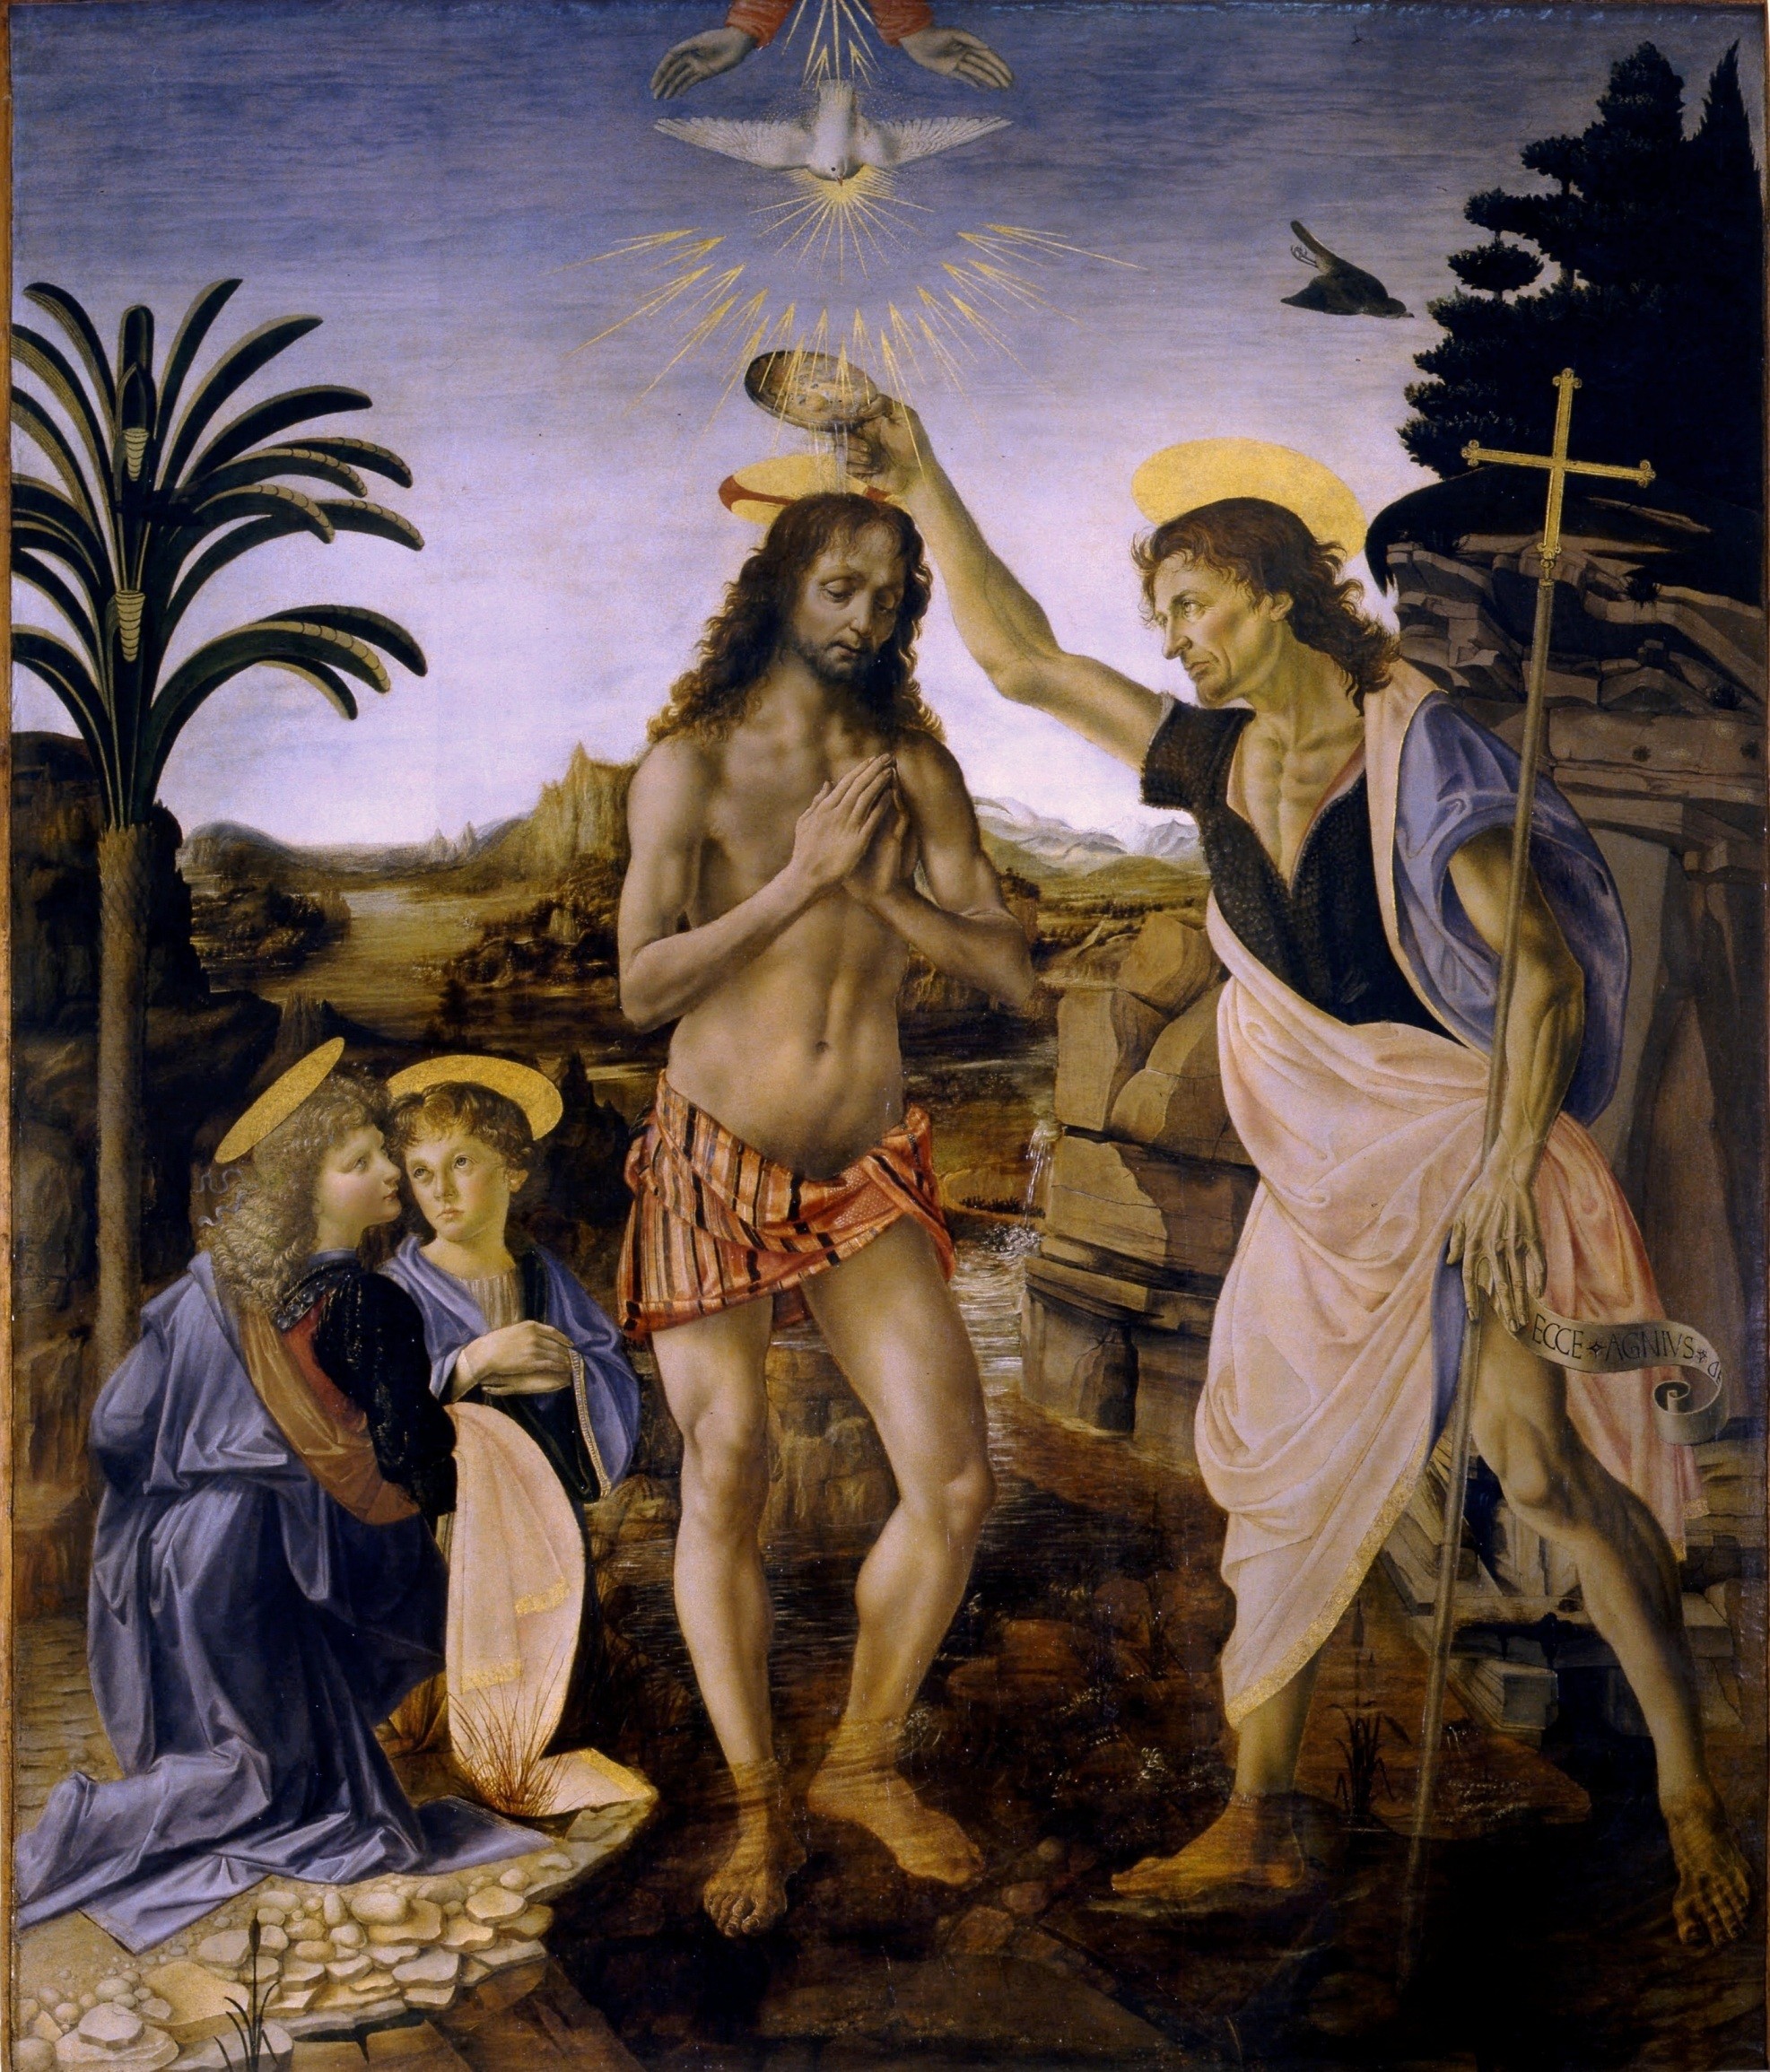 1973x2310 Leonardo da Vinci images The Baptism of Christ (1472–1475) by Verrocchio  and Leonardo HD wallpaper and background photos